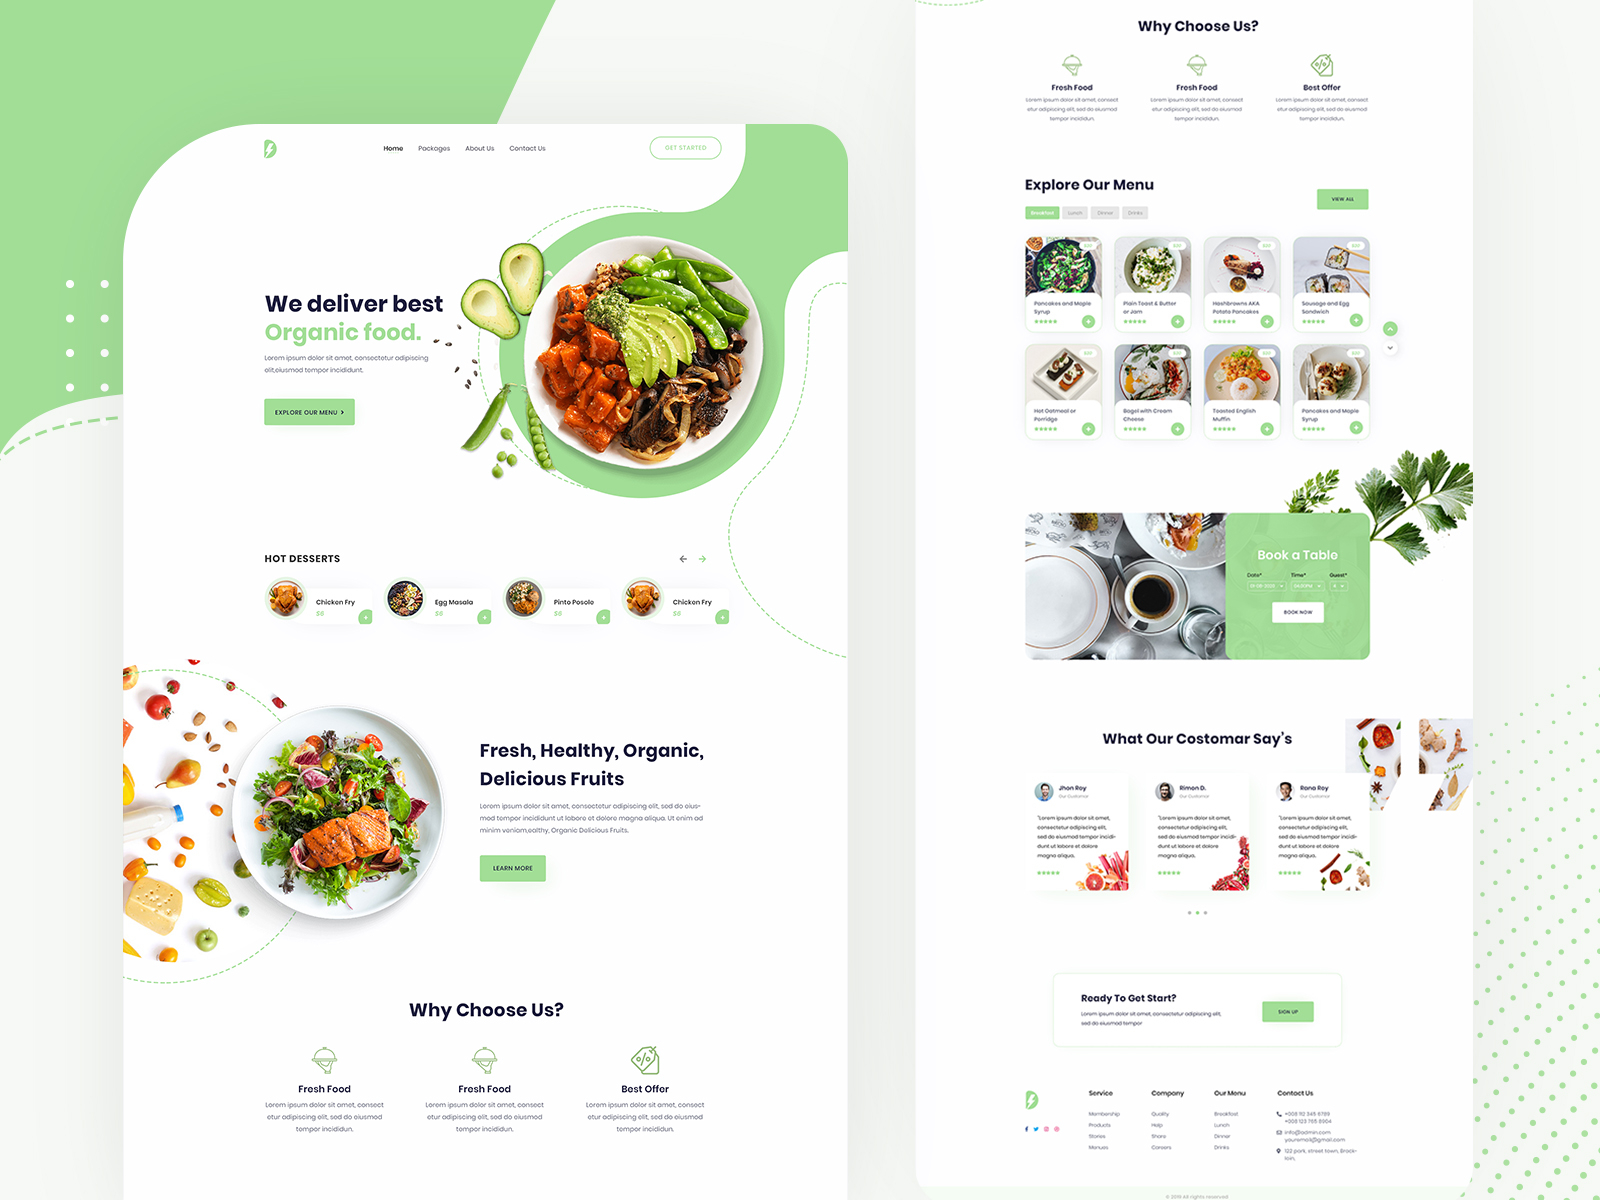 Mẫu thiết kế website thực phẩm đẹp số 10 - dribbble-com/shots/12489150-Daas-Restaurant-home-page/attachments/4097746?mode=media